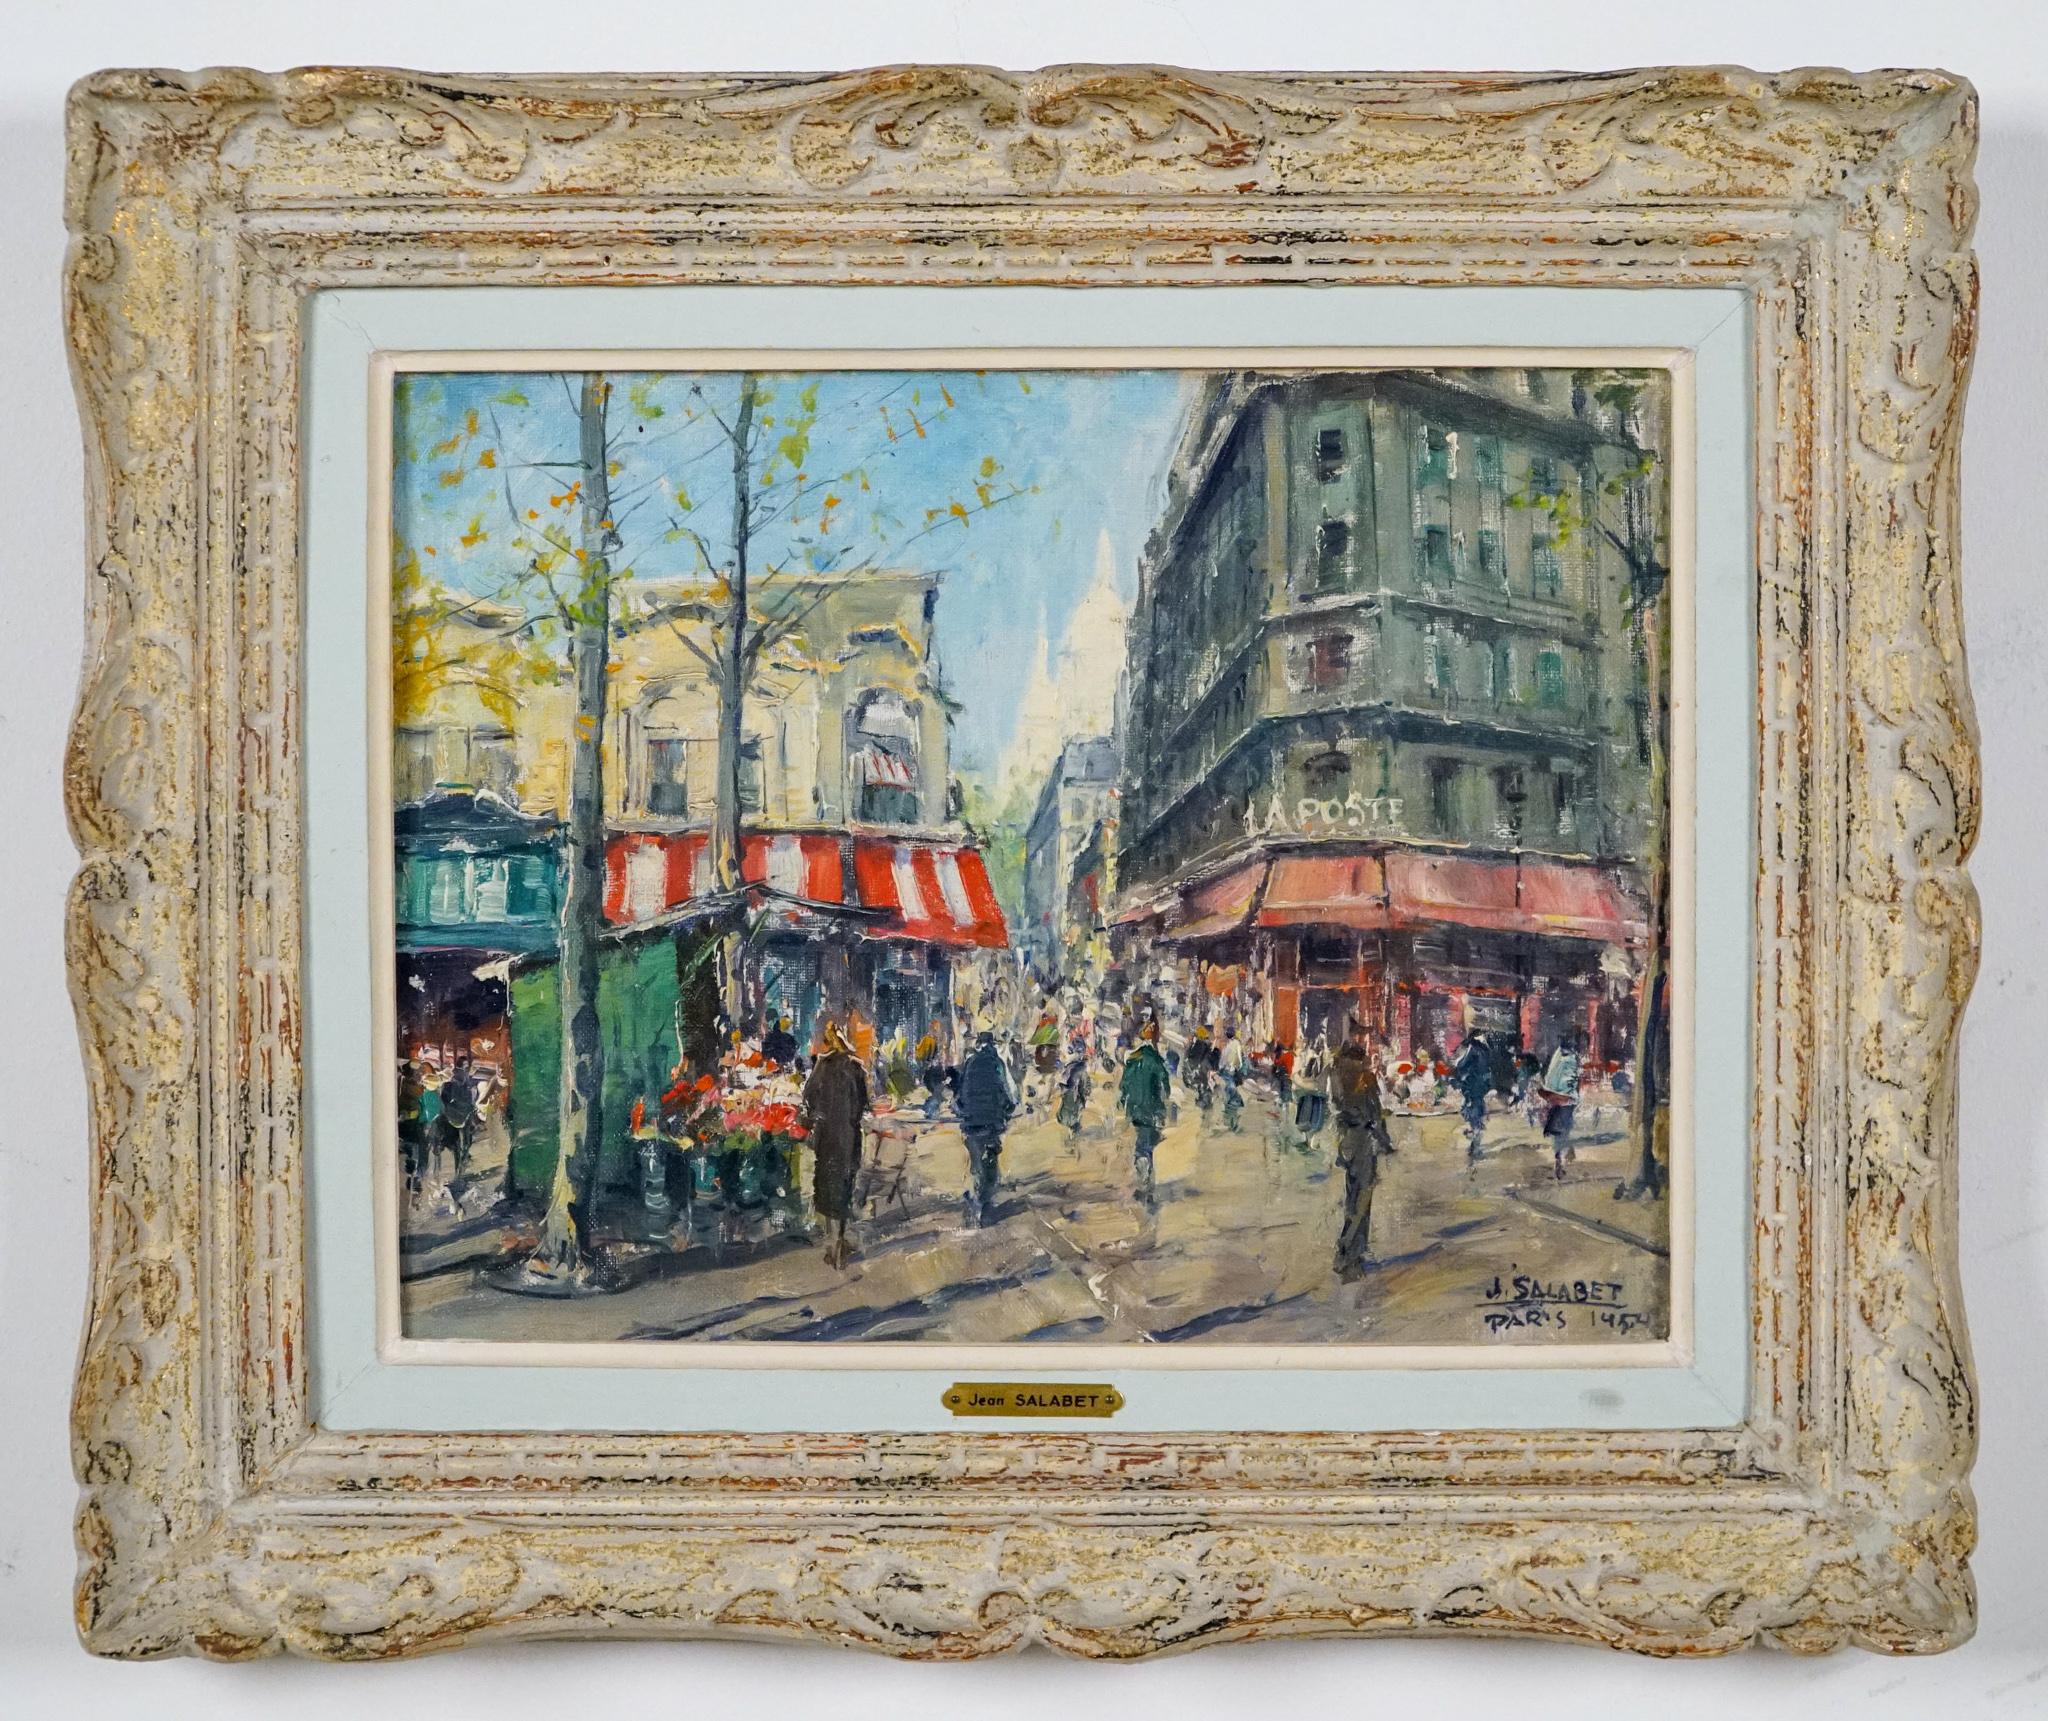 La Poste   1954  PARIS  - Post Impressionist street scene - Painting by Jean Salabet